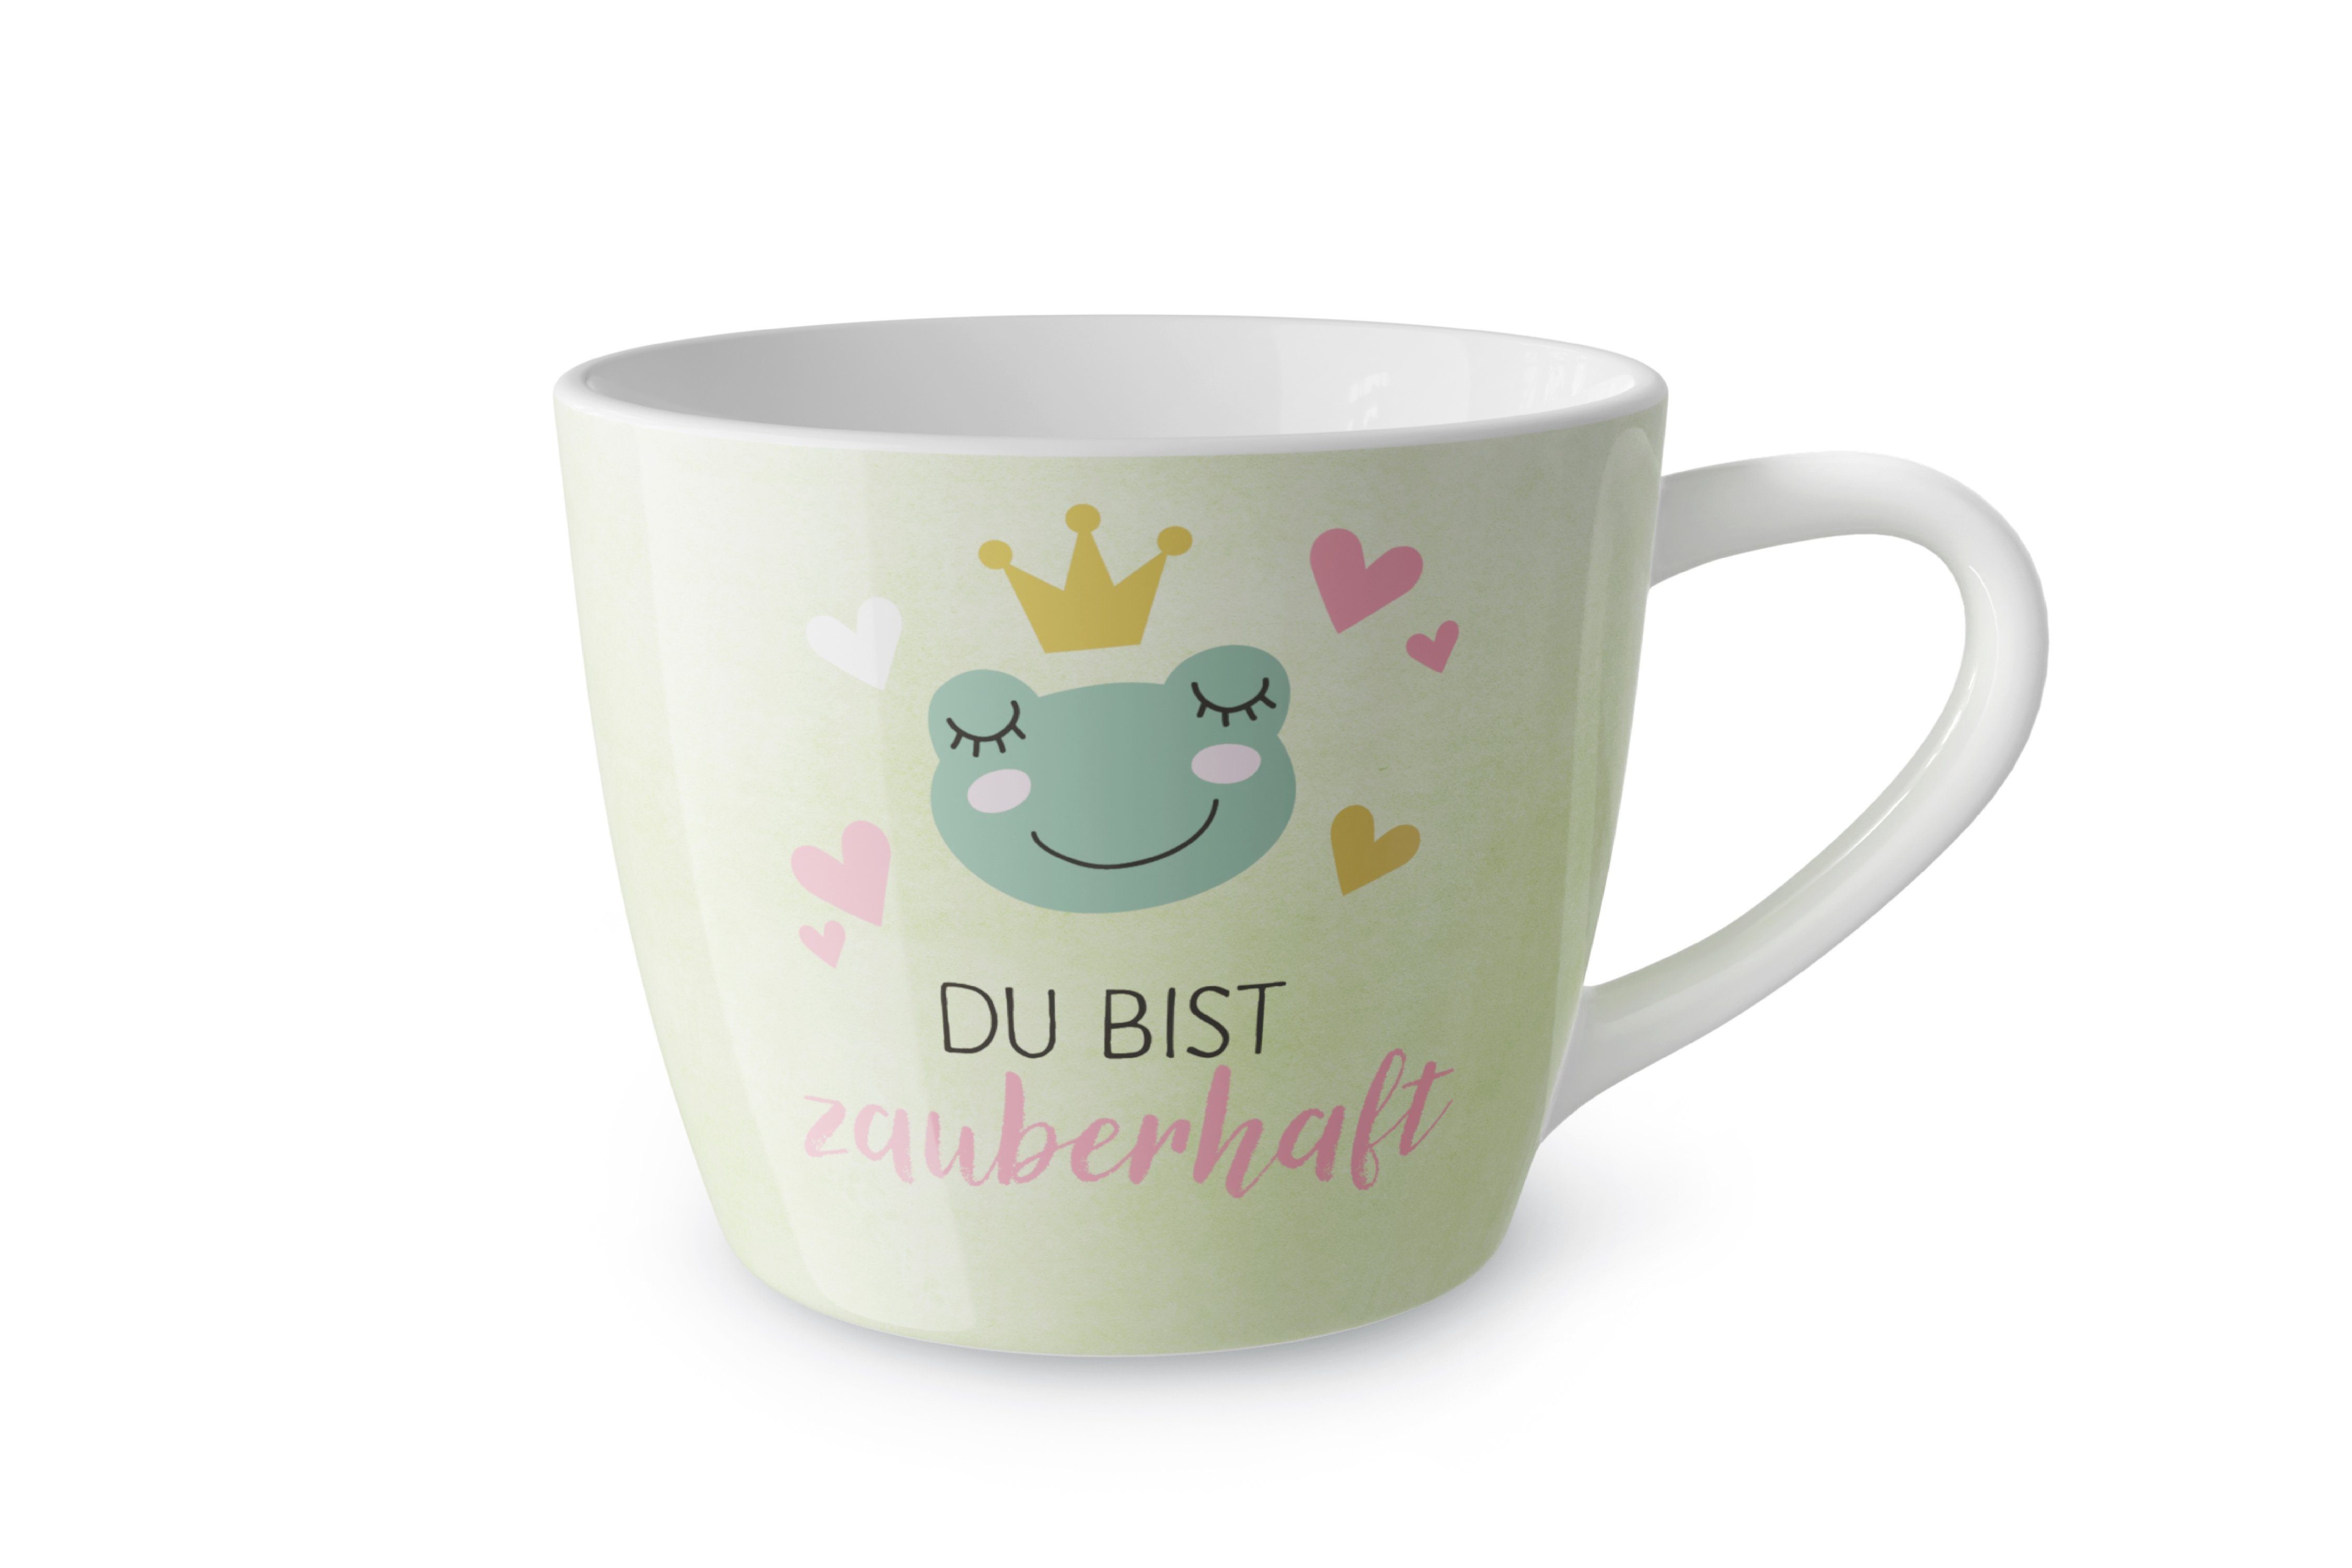 La Vida Tasse Kaffeetasse Teetasse Tasse Maxi Becher für dich la vida "Bist, Material: Porzellan